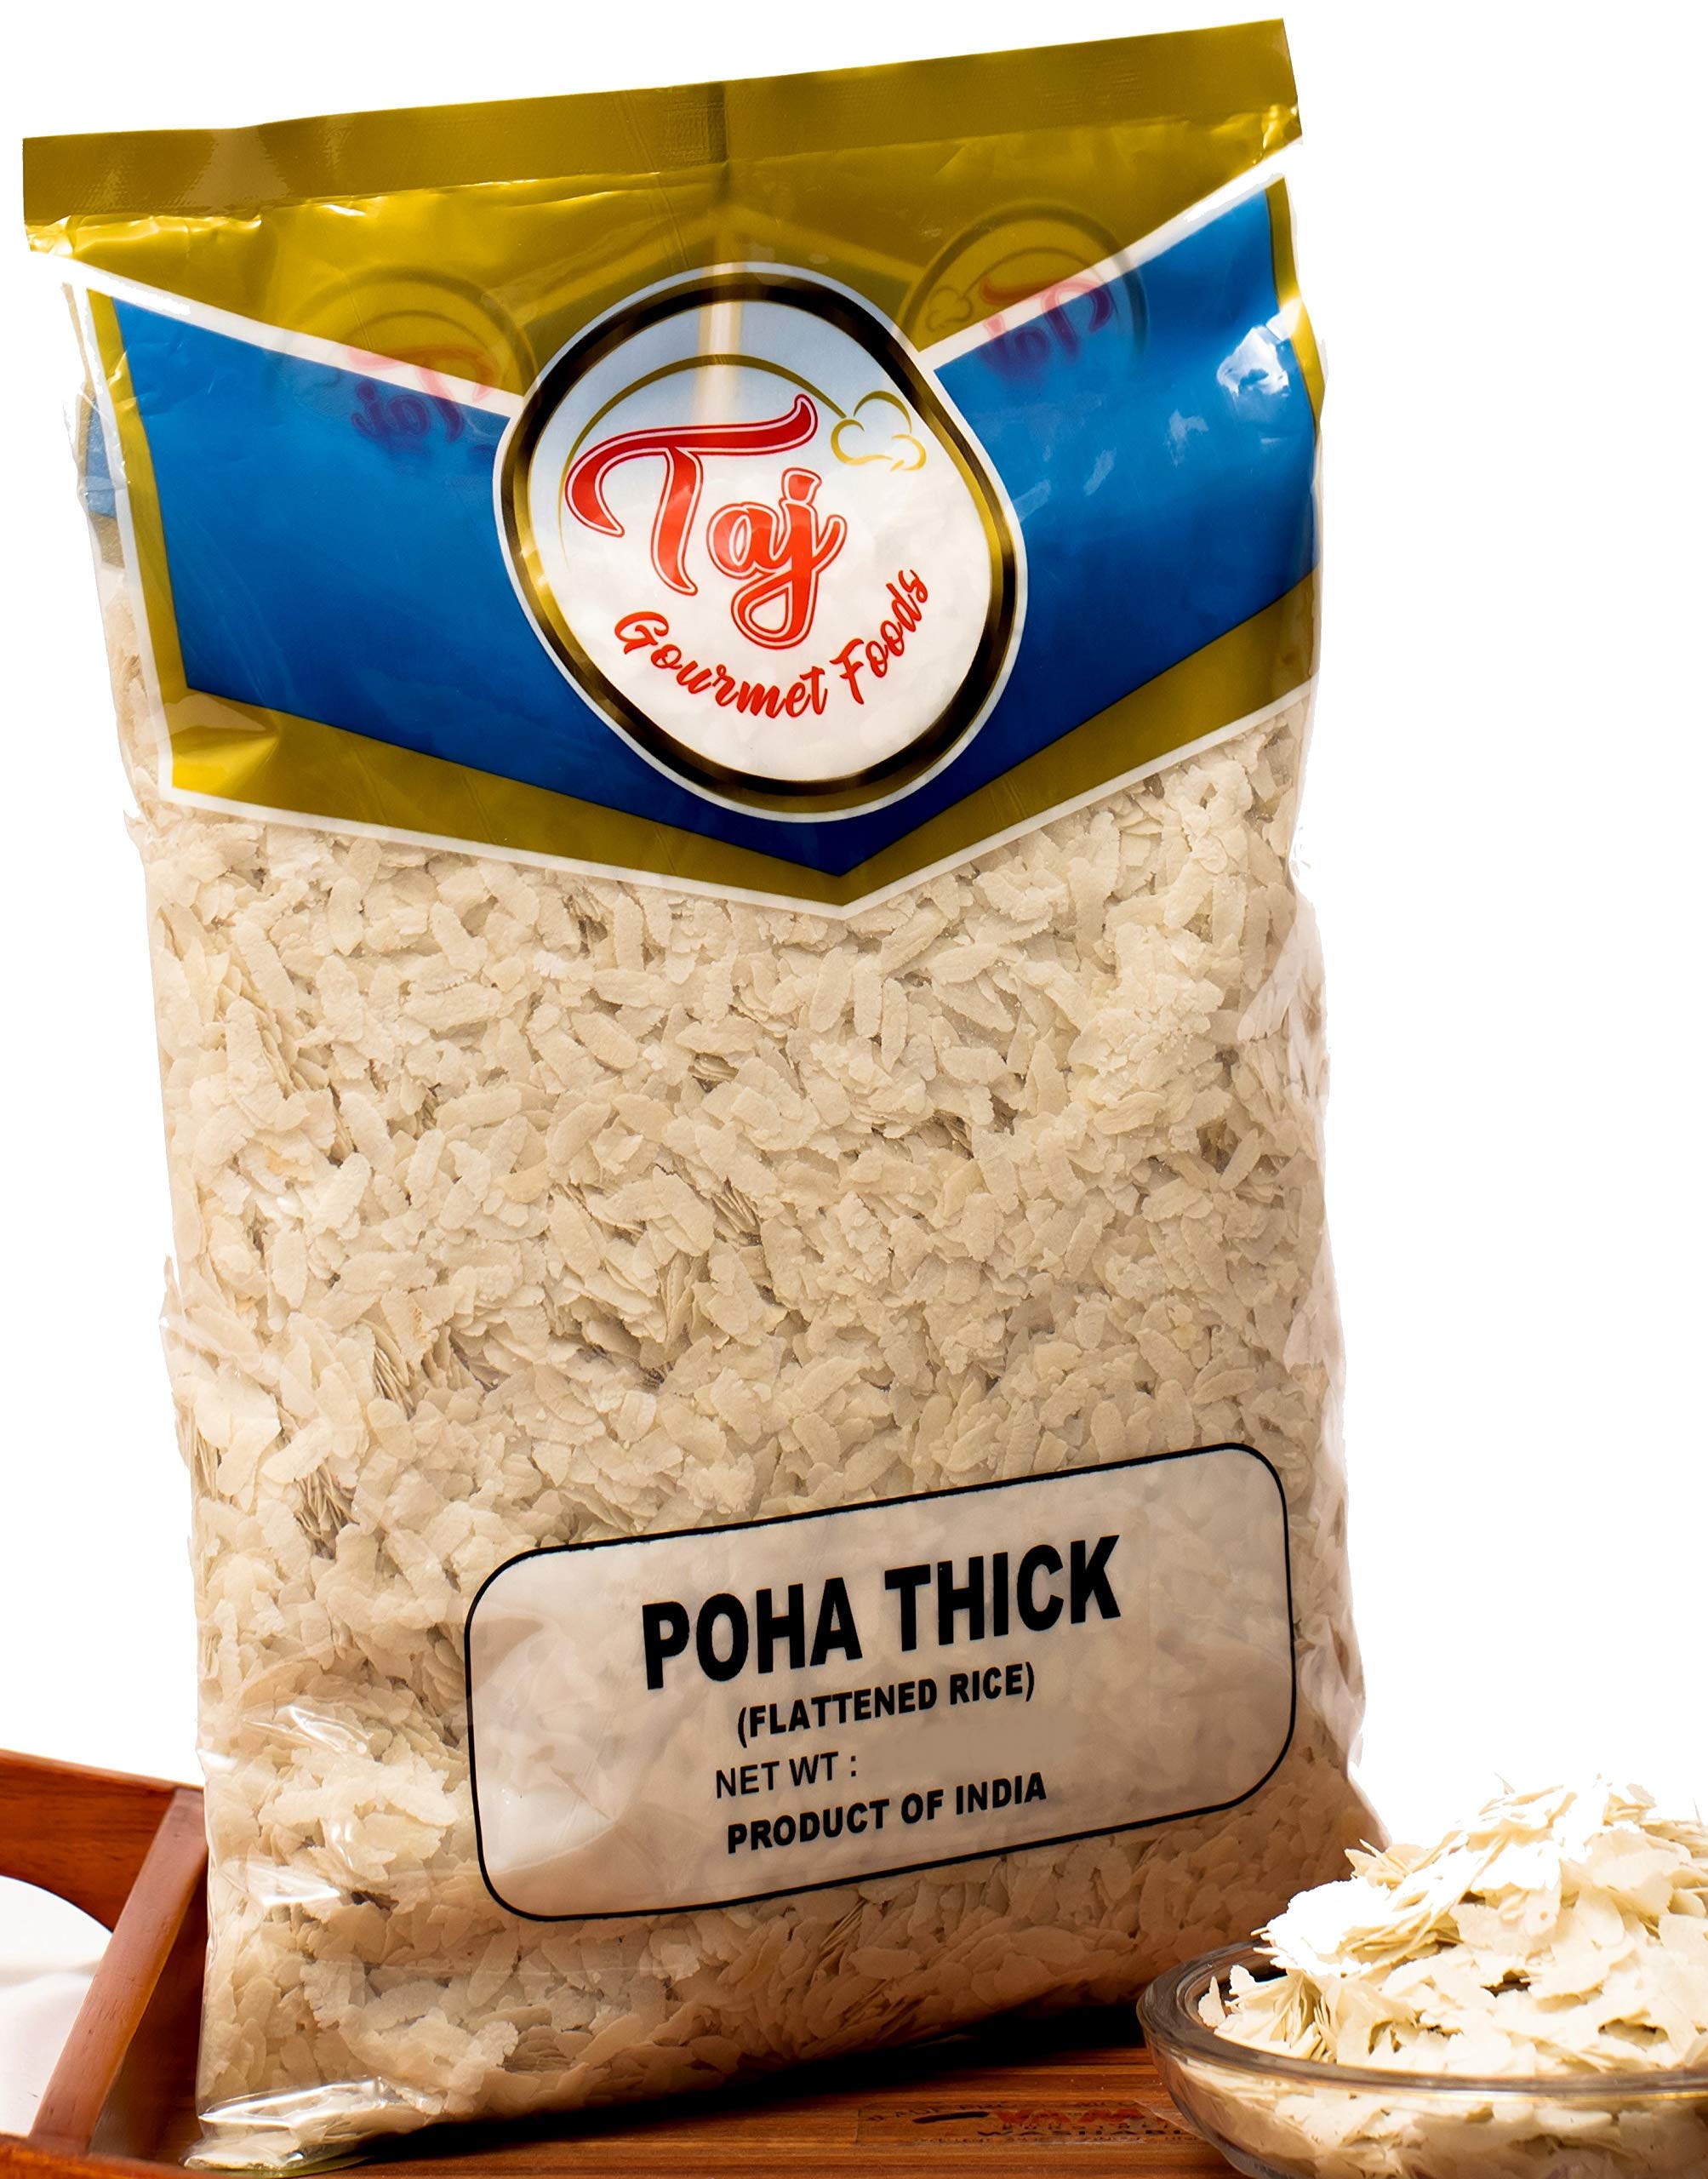 TAJ Premium Indian Poha Thick Powa Flattened Rice (4-Pounds)